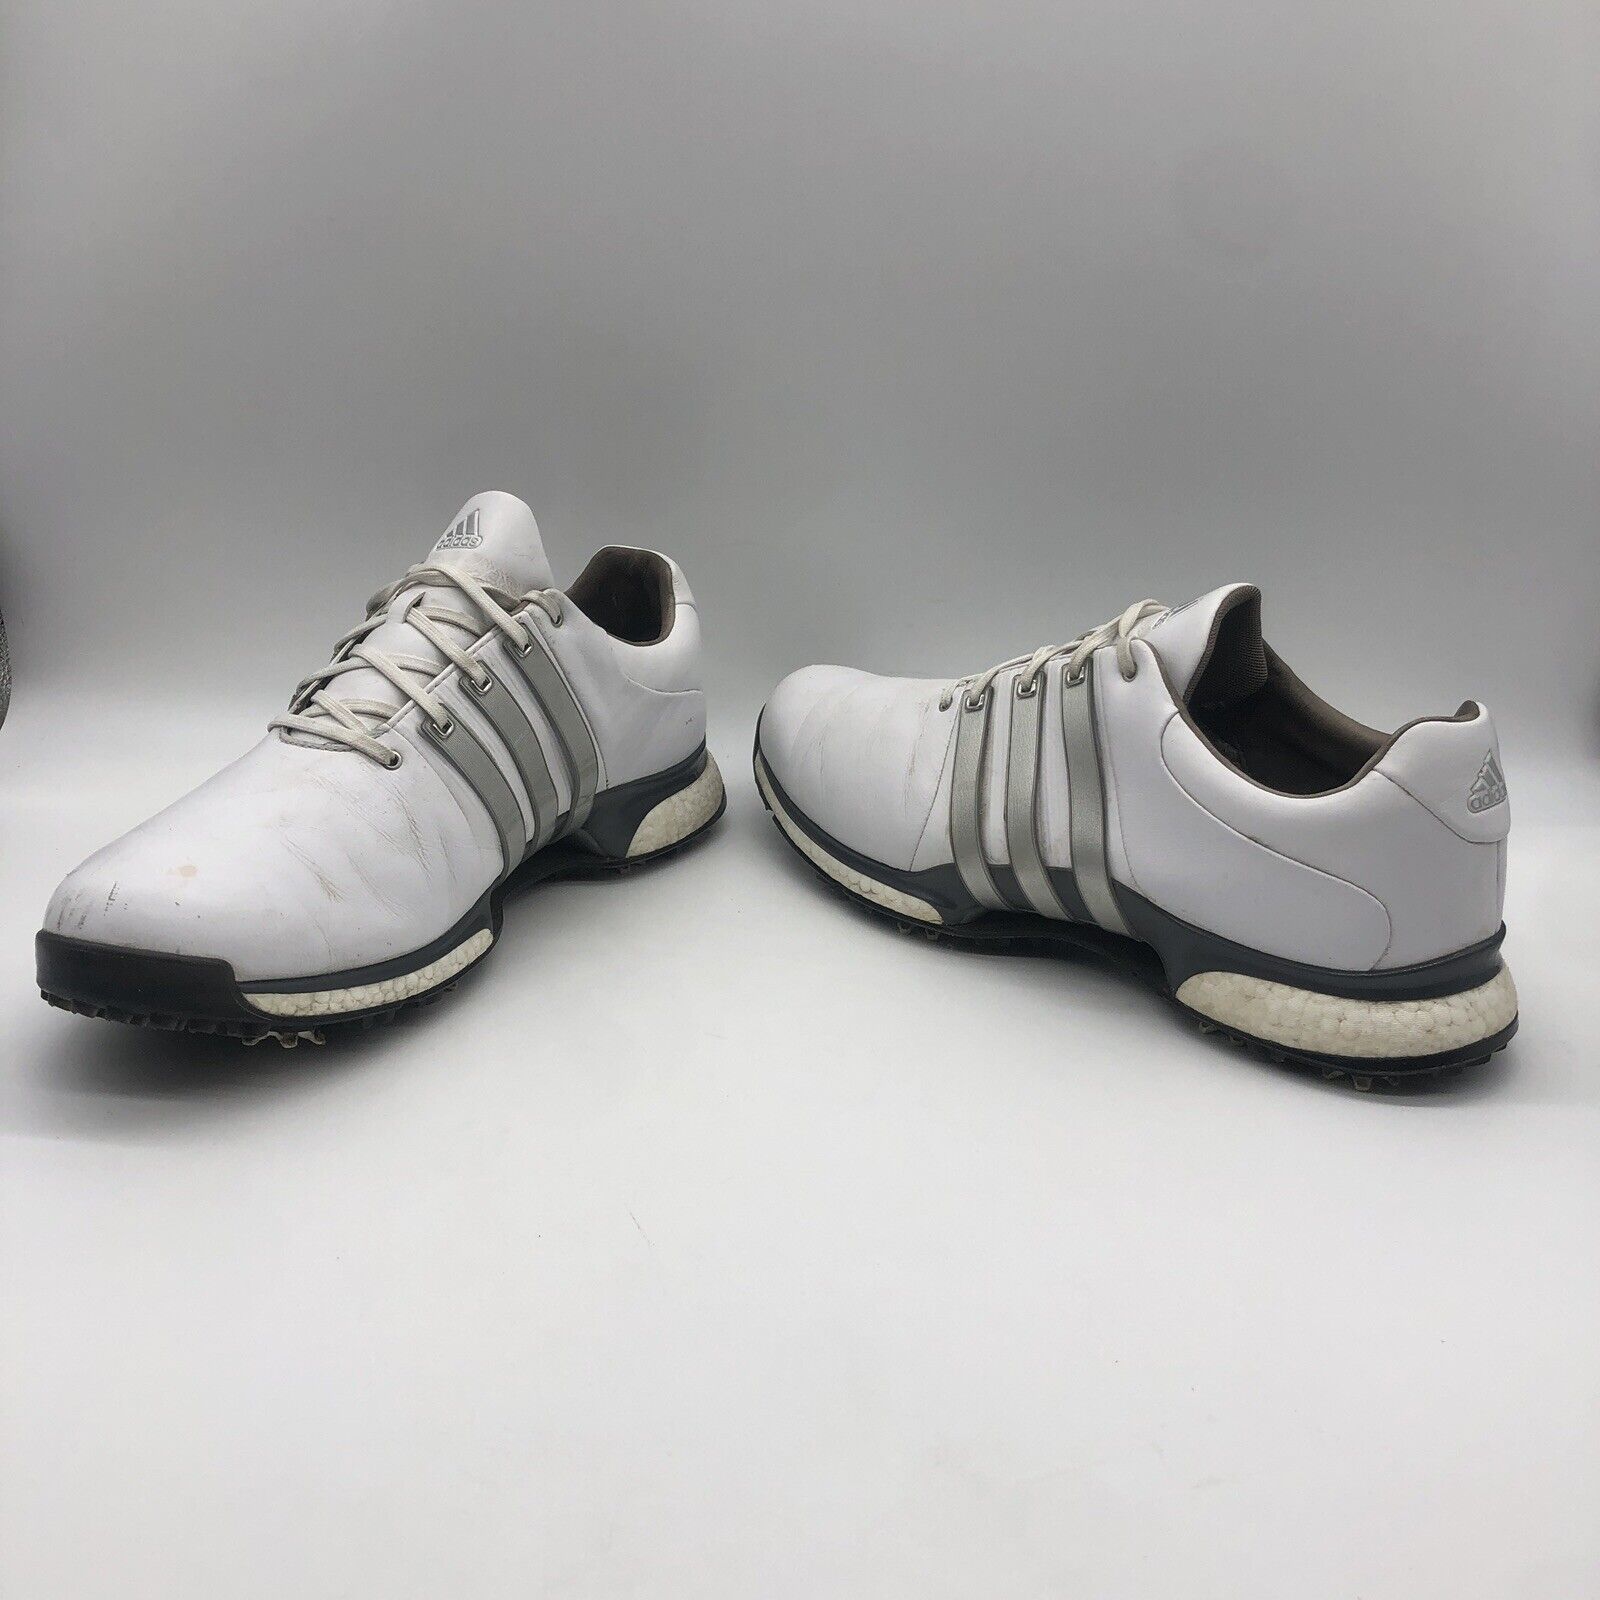 Adidas Tour 360 XT Boost Golf Shoes White / Silver BB7921 Men's Size 15